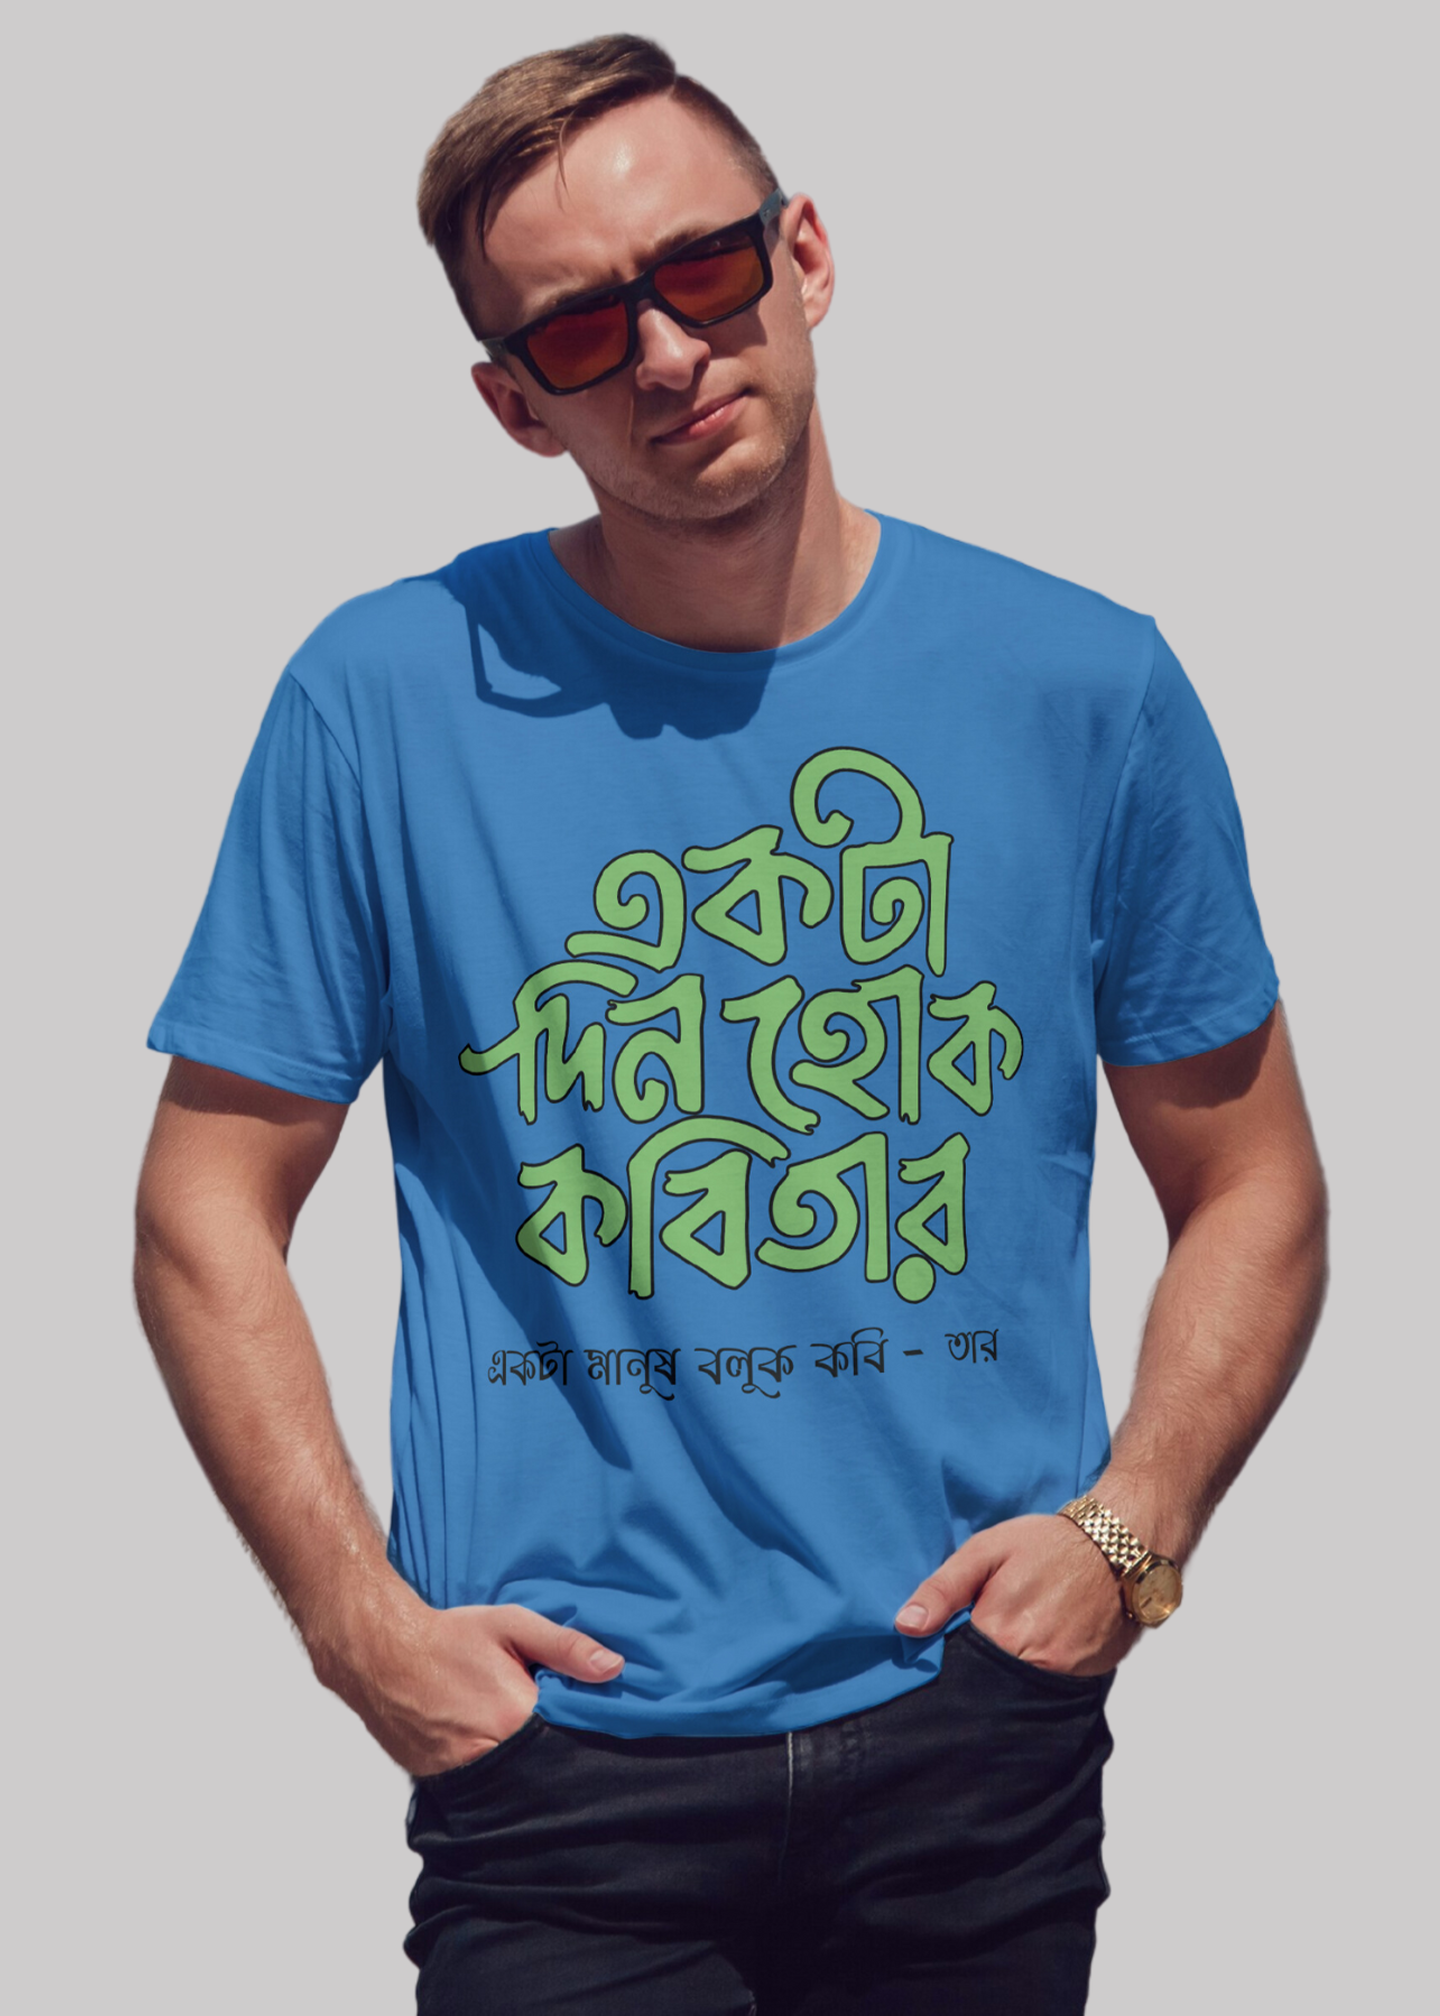 Ekta din hok kobitar bengali caligraphy Printed Half Sleeve Premium Cotton T-shirt For Men